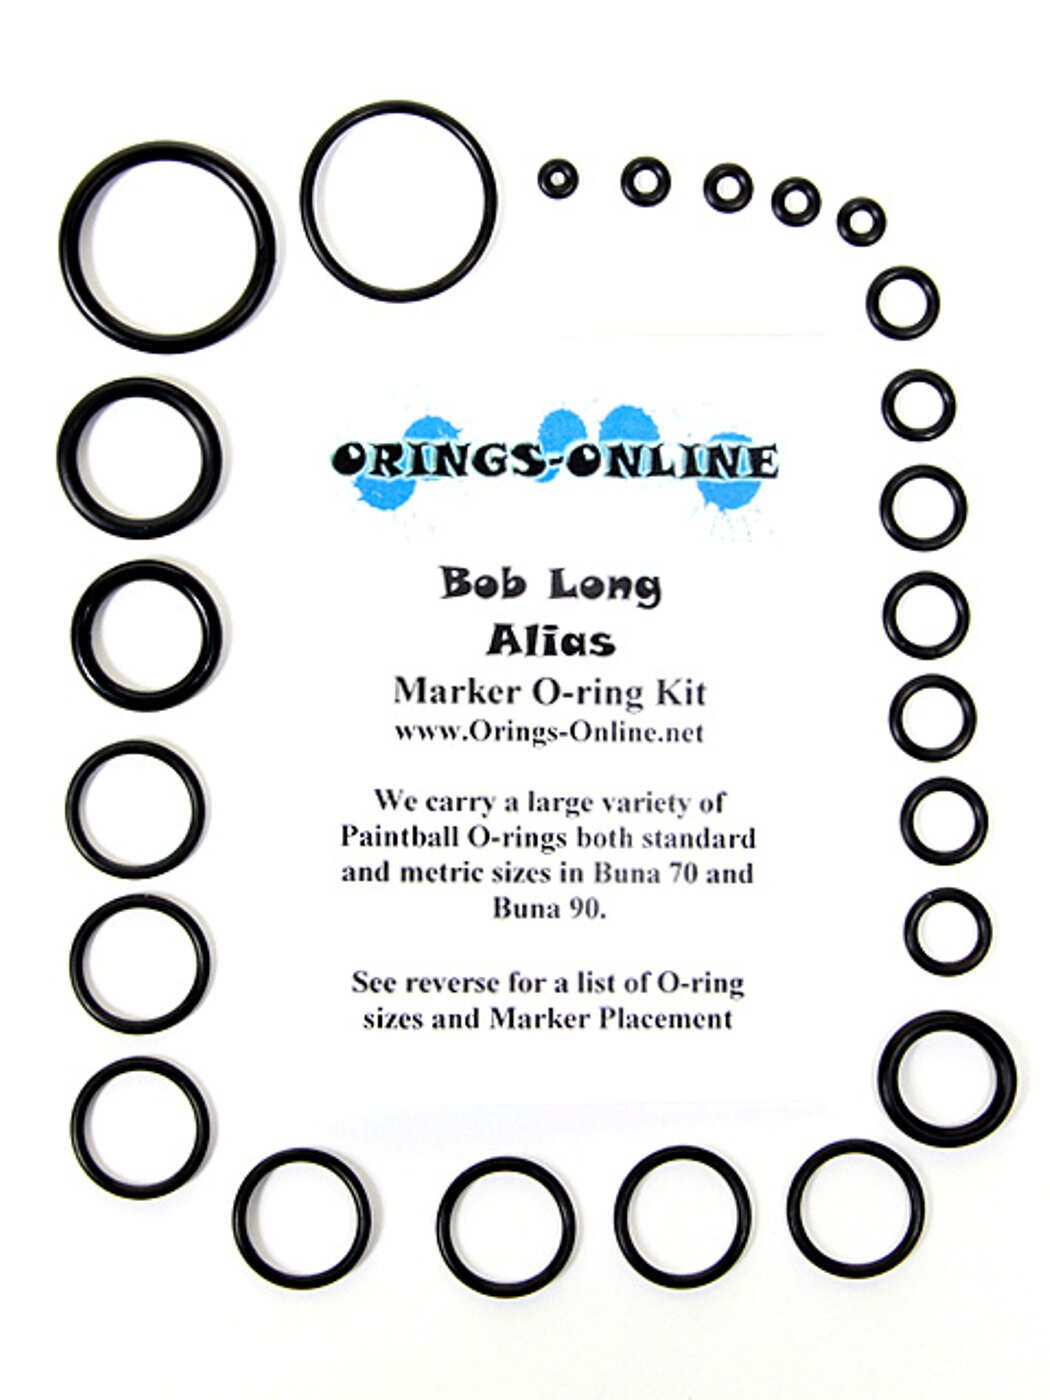 Bob Long Alias Marker O-ring Kit